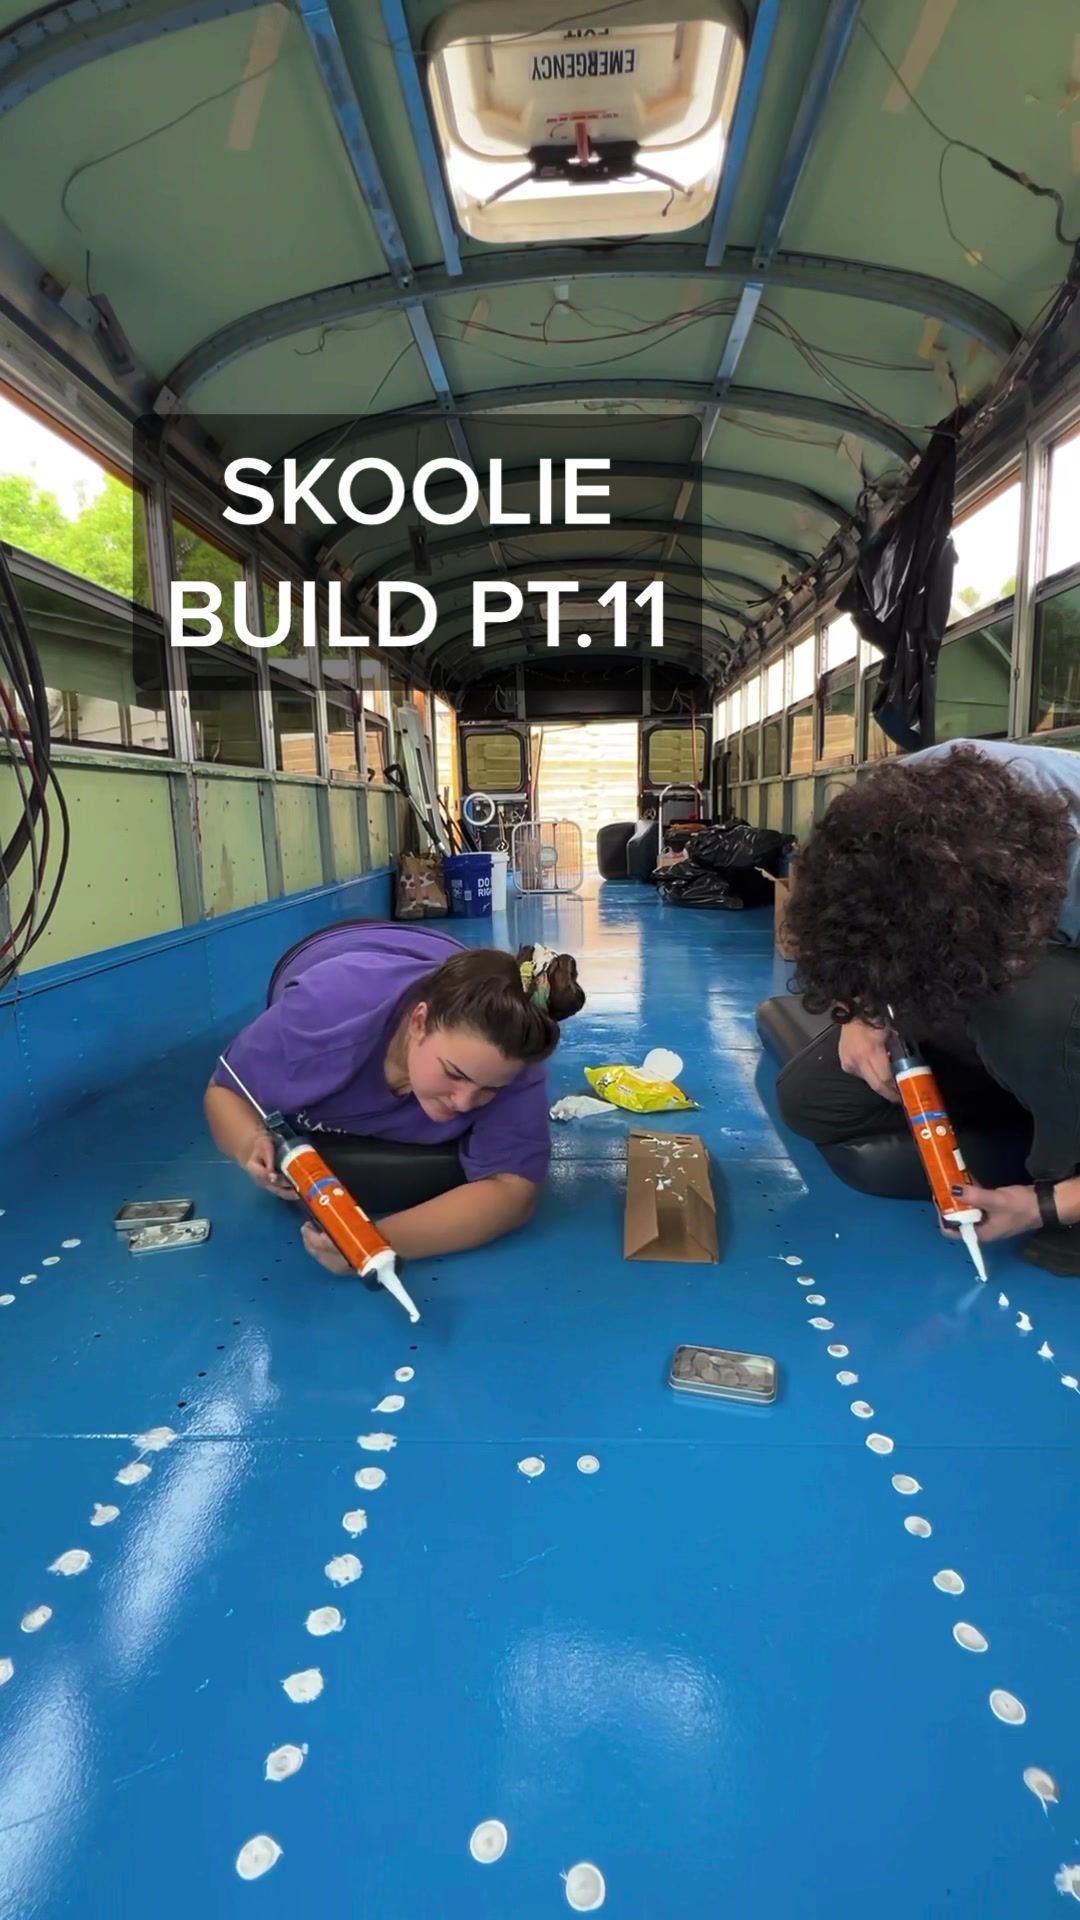 How would you design your Skoolie layout? #skooliebuild#diy#skoolieconversion#diyproject#skoolie#busbuild#buslife#busconversion#vanlife#vanconversion#hgtv